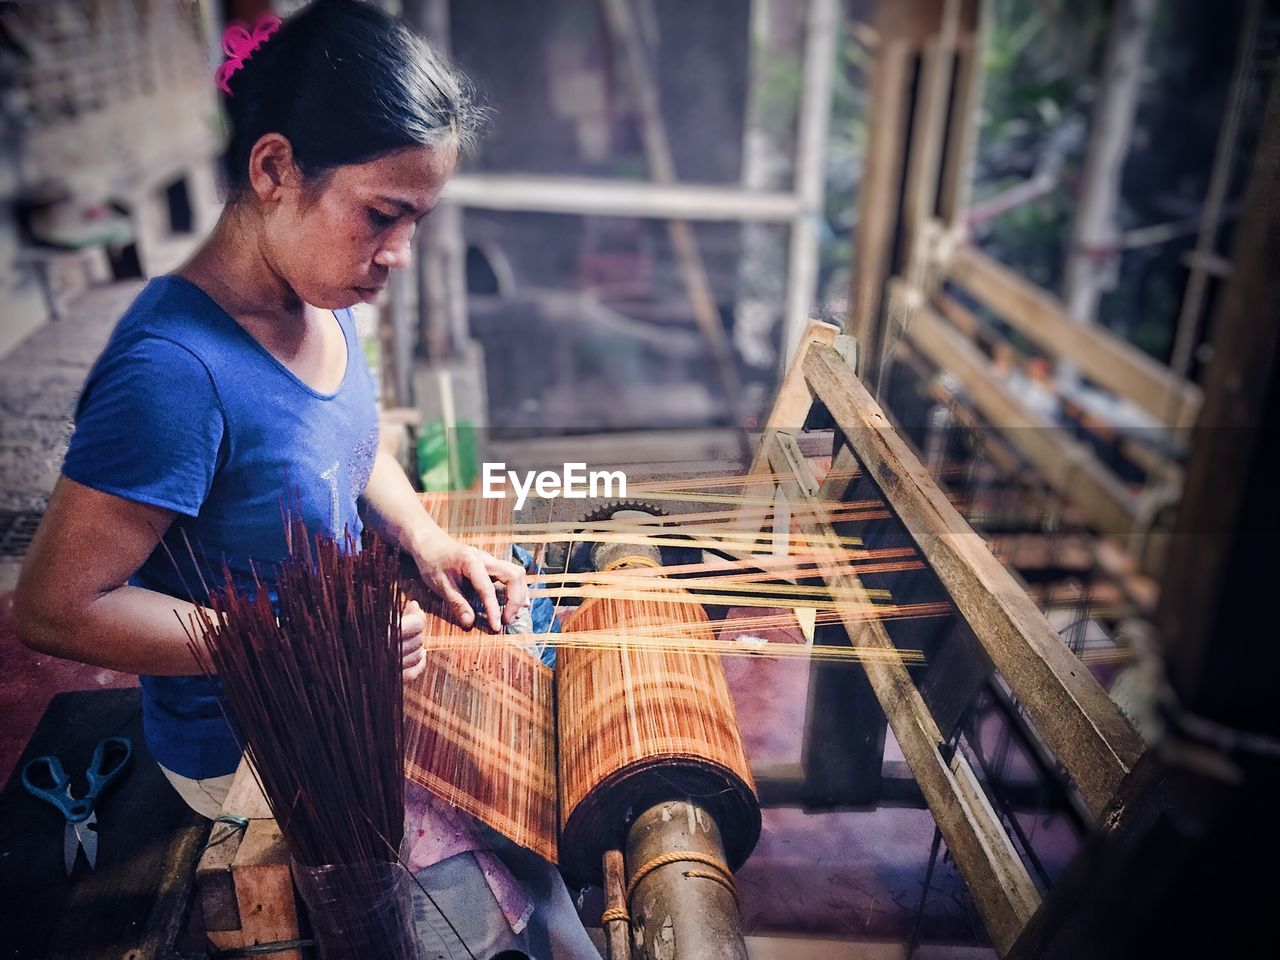 Woman weaving loom